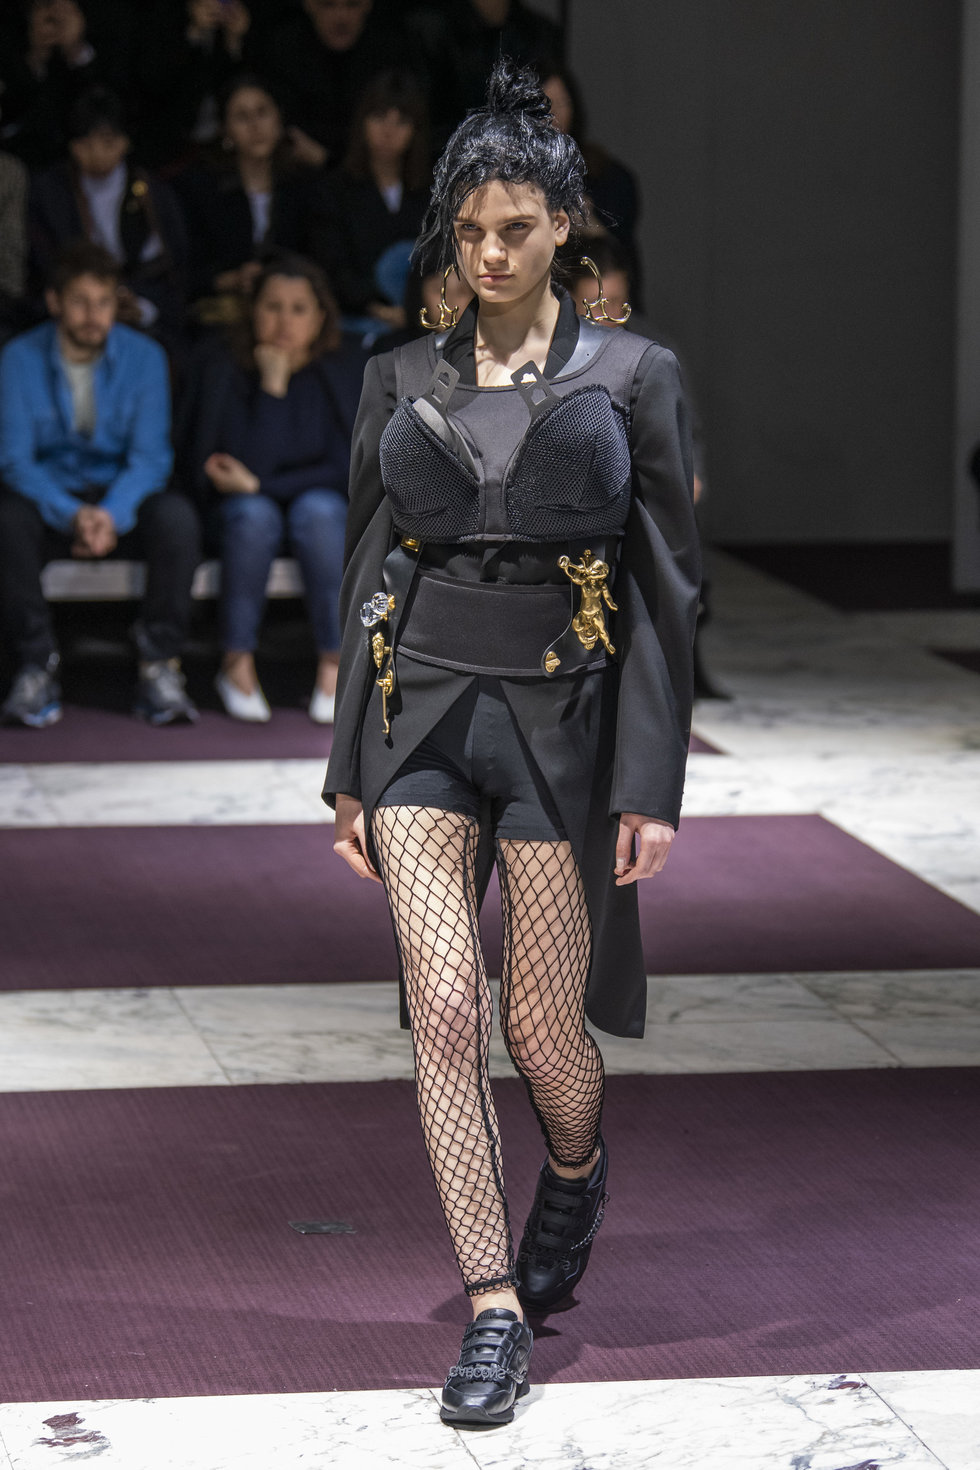 Comme des Garçons' Shadowy Armor at Paris Fashion Week - PAPER